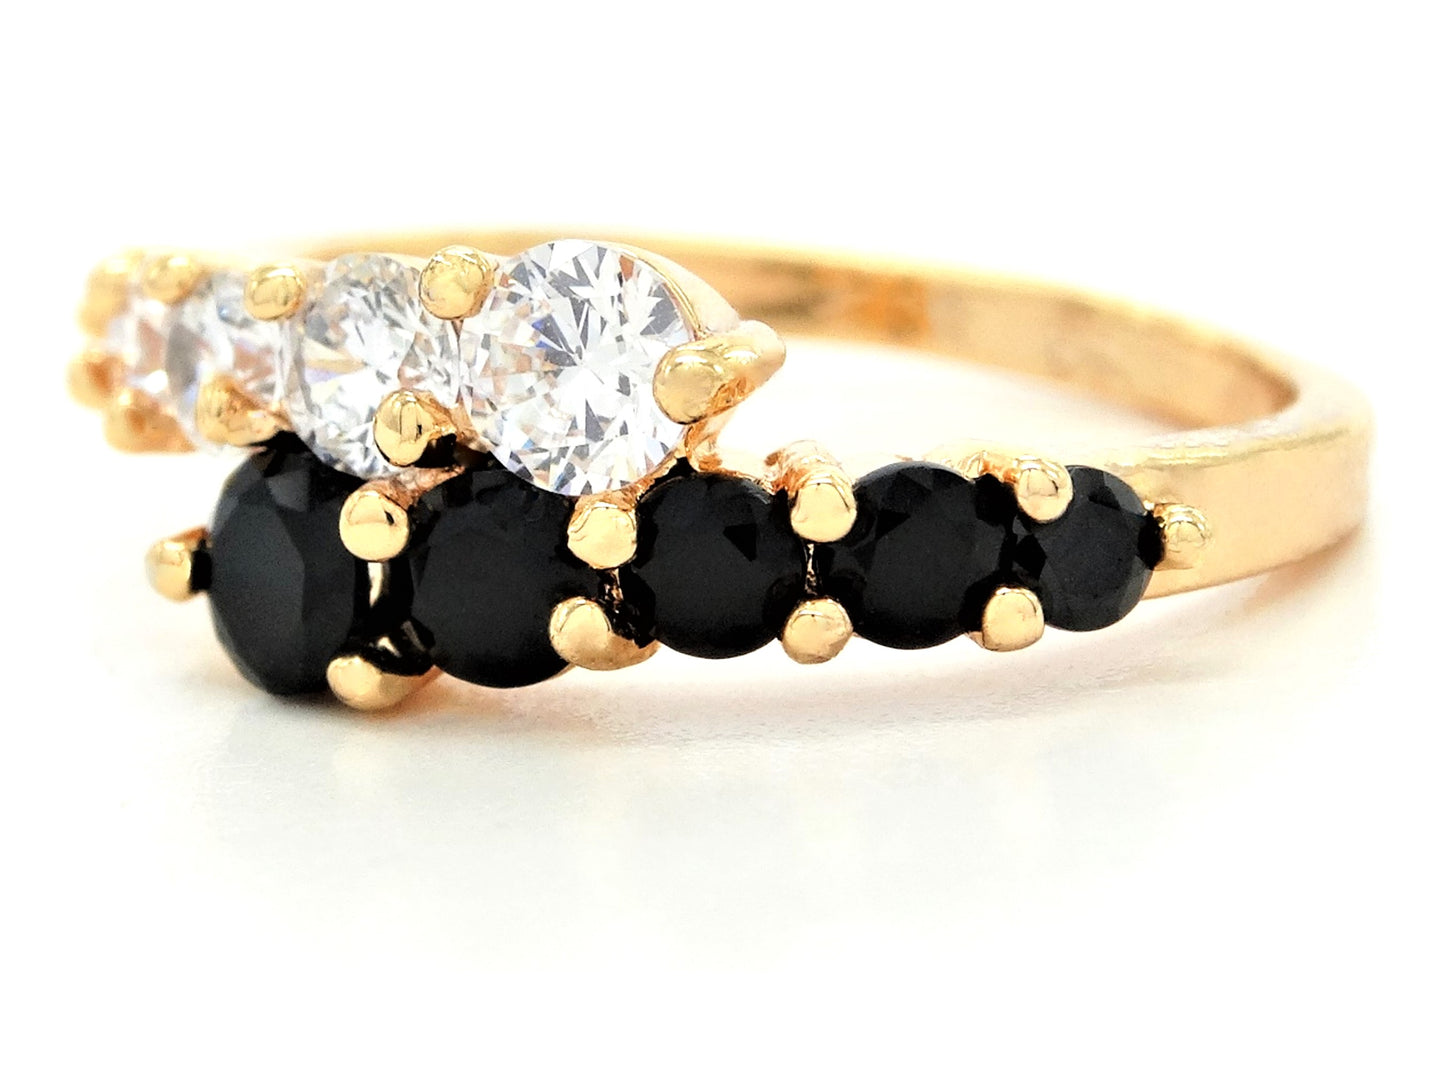 Gold white and black gem ring SIDE